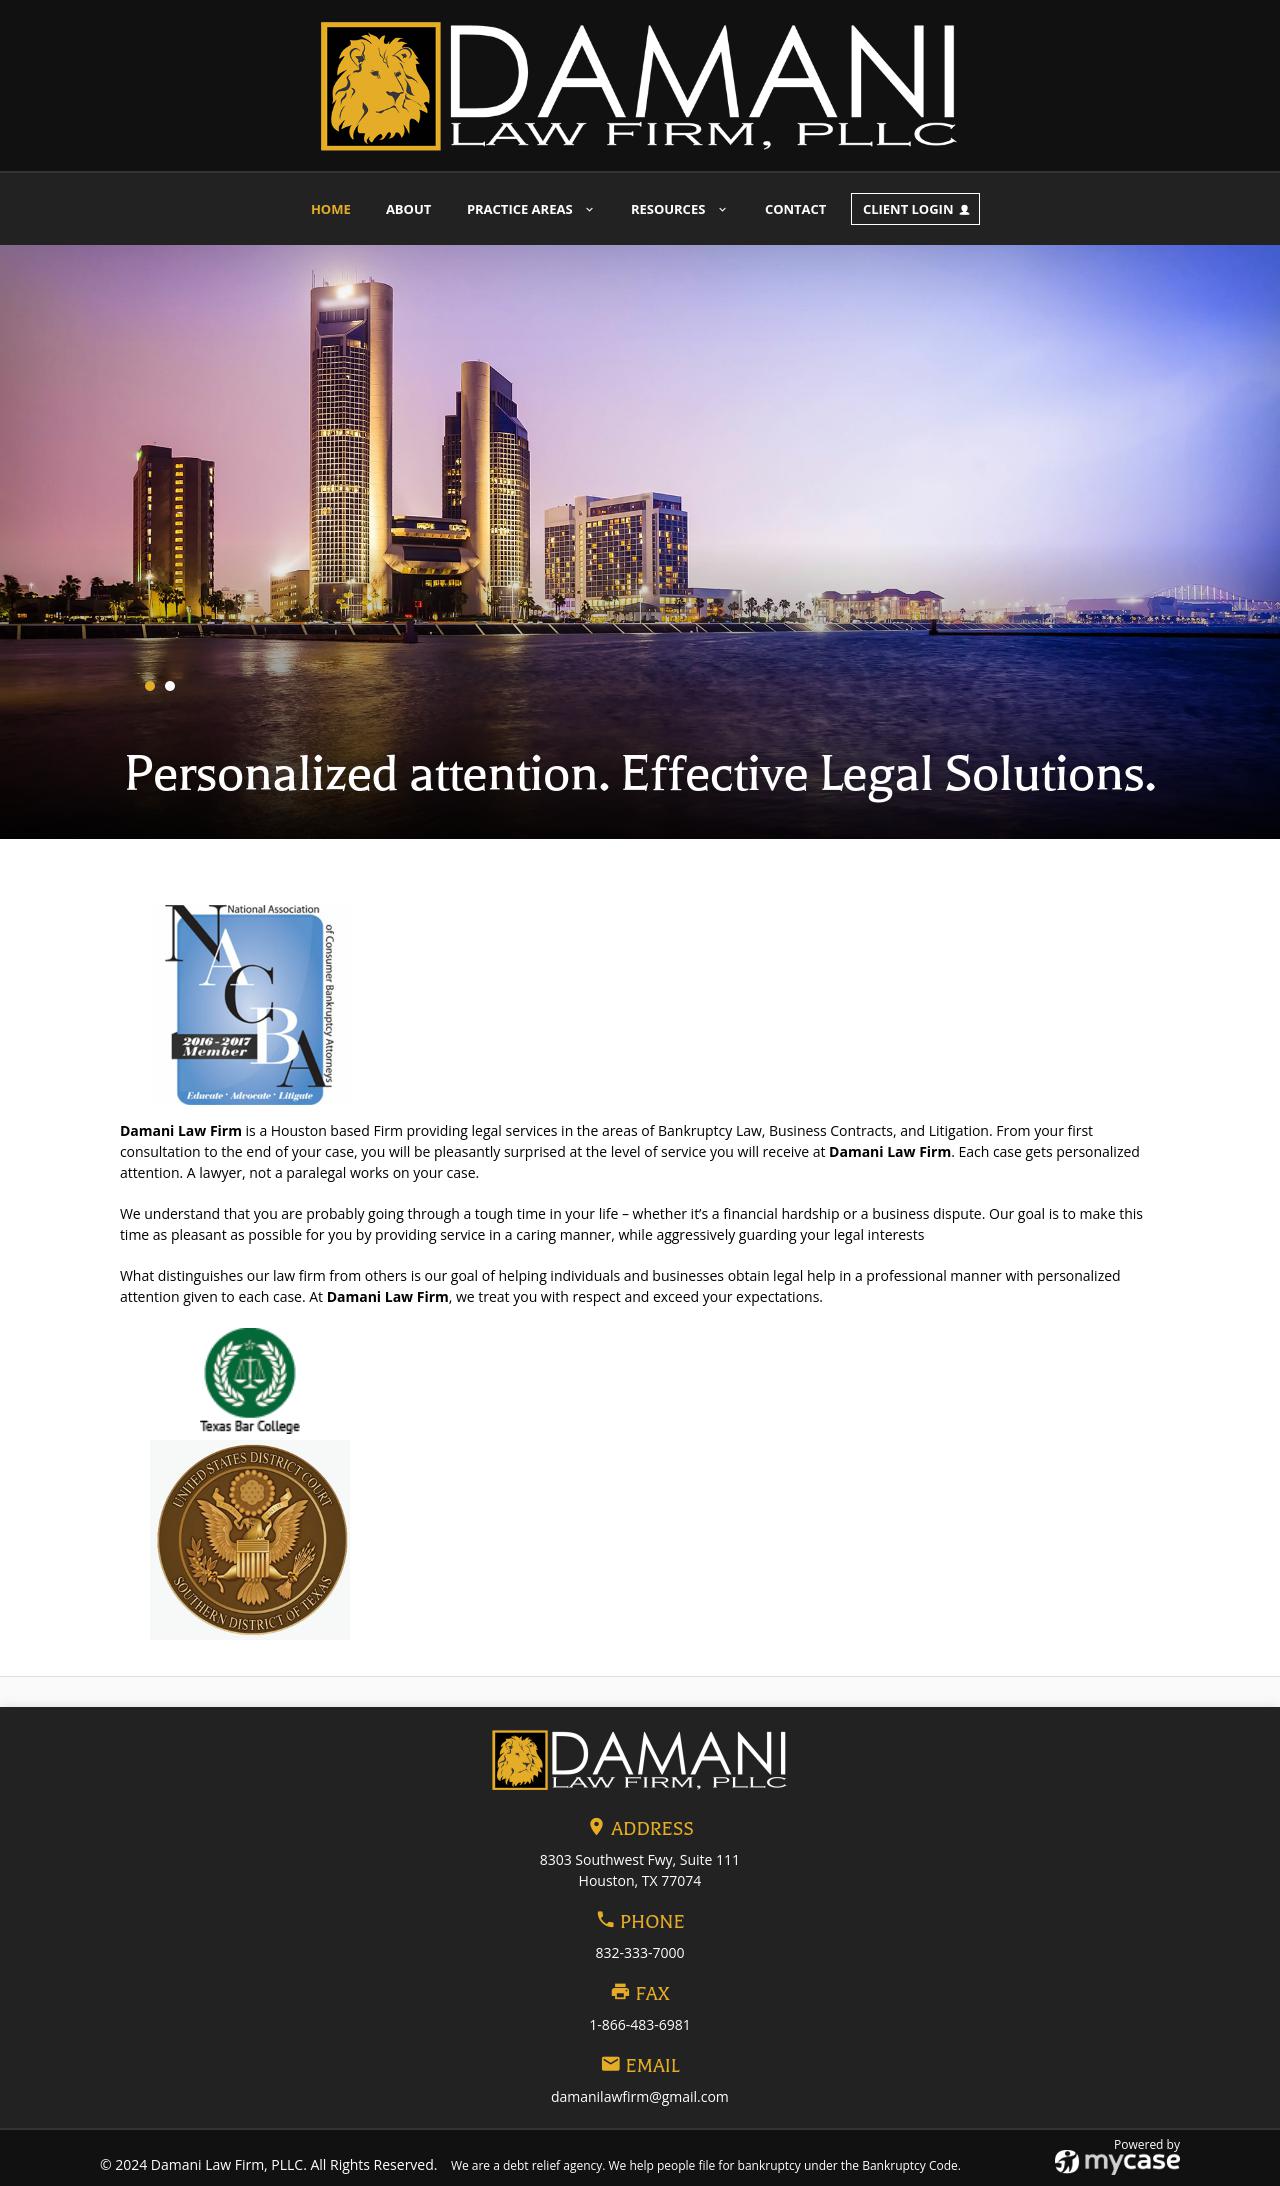 Damani Law Firm, PLLC - Houston TX Lawyers